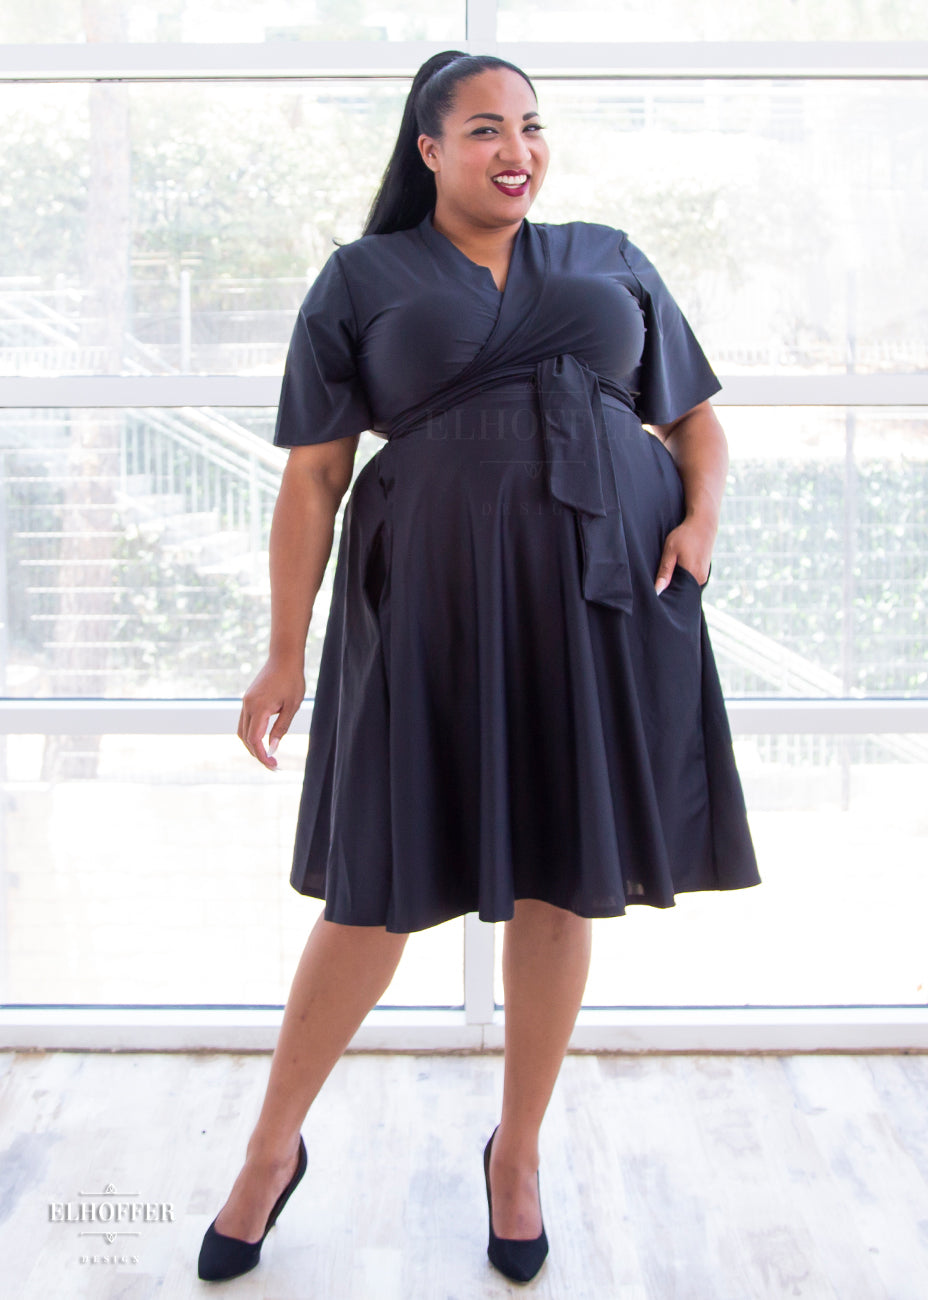 Tas, a medium skinned 2XL model with dark brown hair, is wearing a black knee length wrap dress with flutter sleeves.